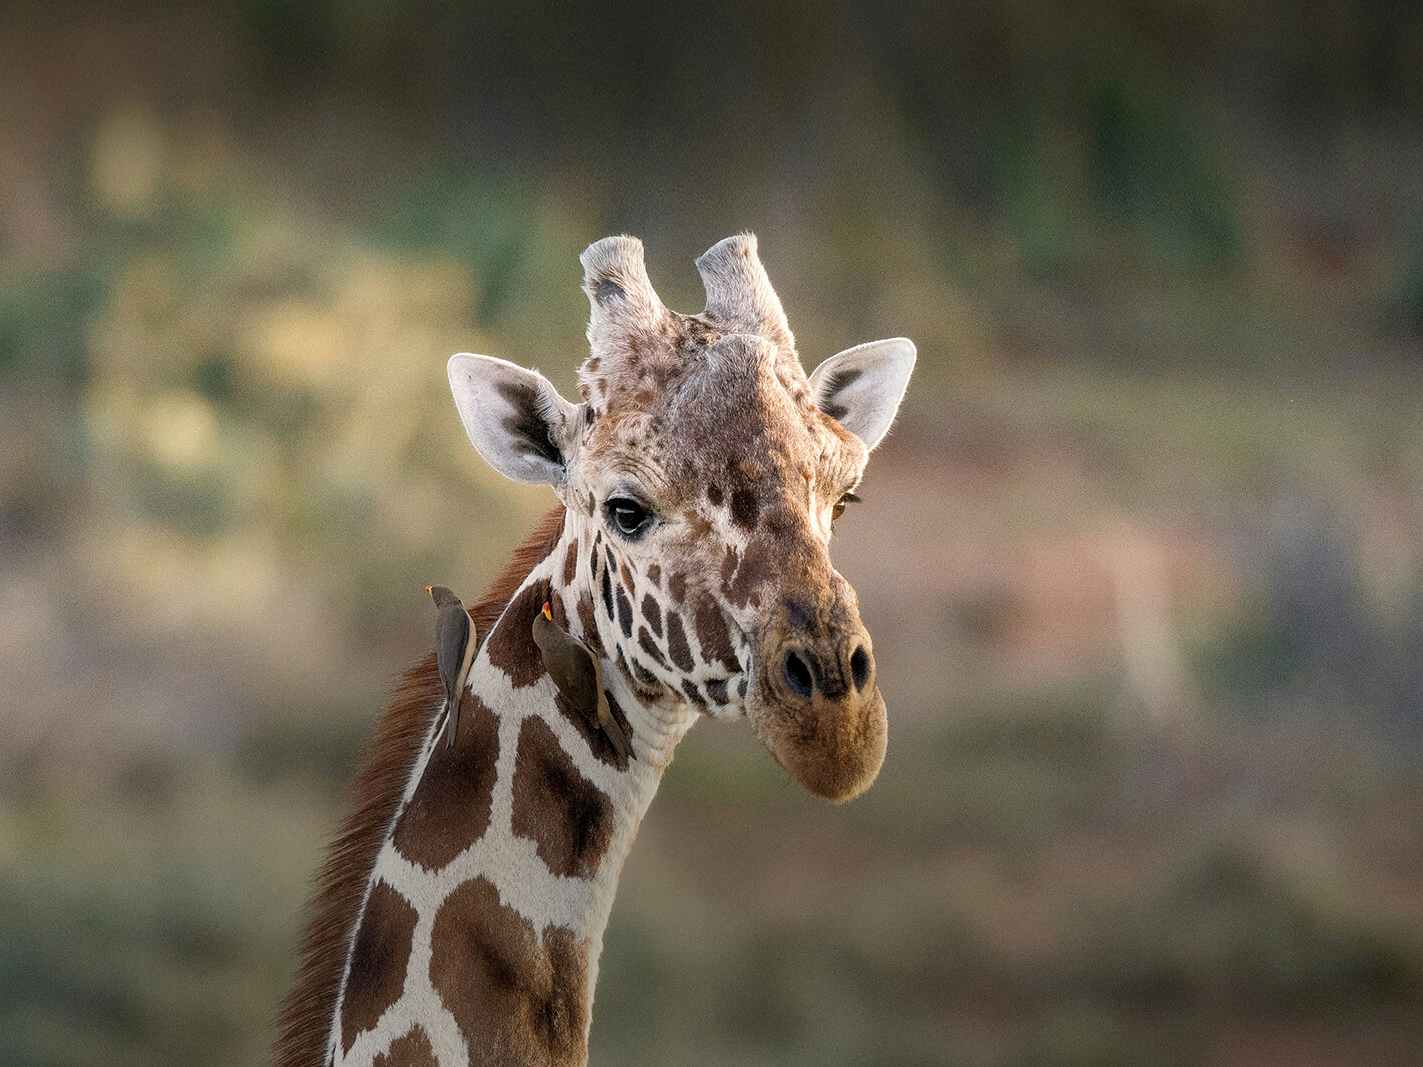 giraffe at san diego zoo in california